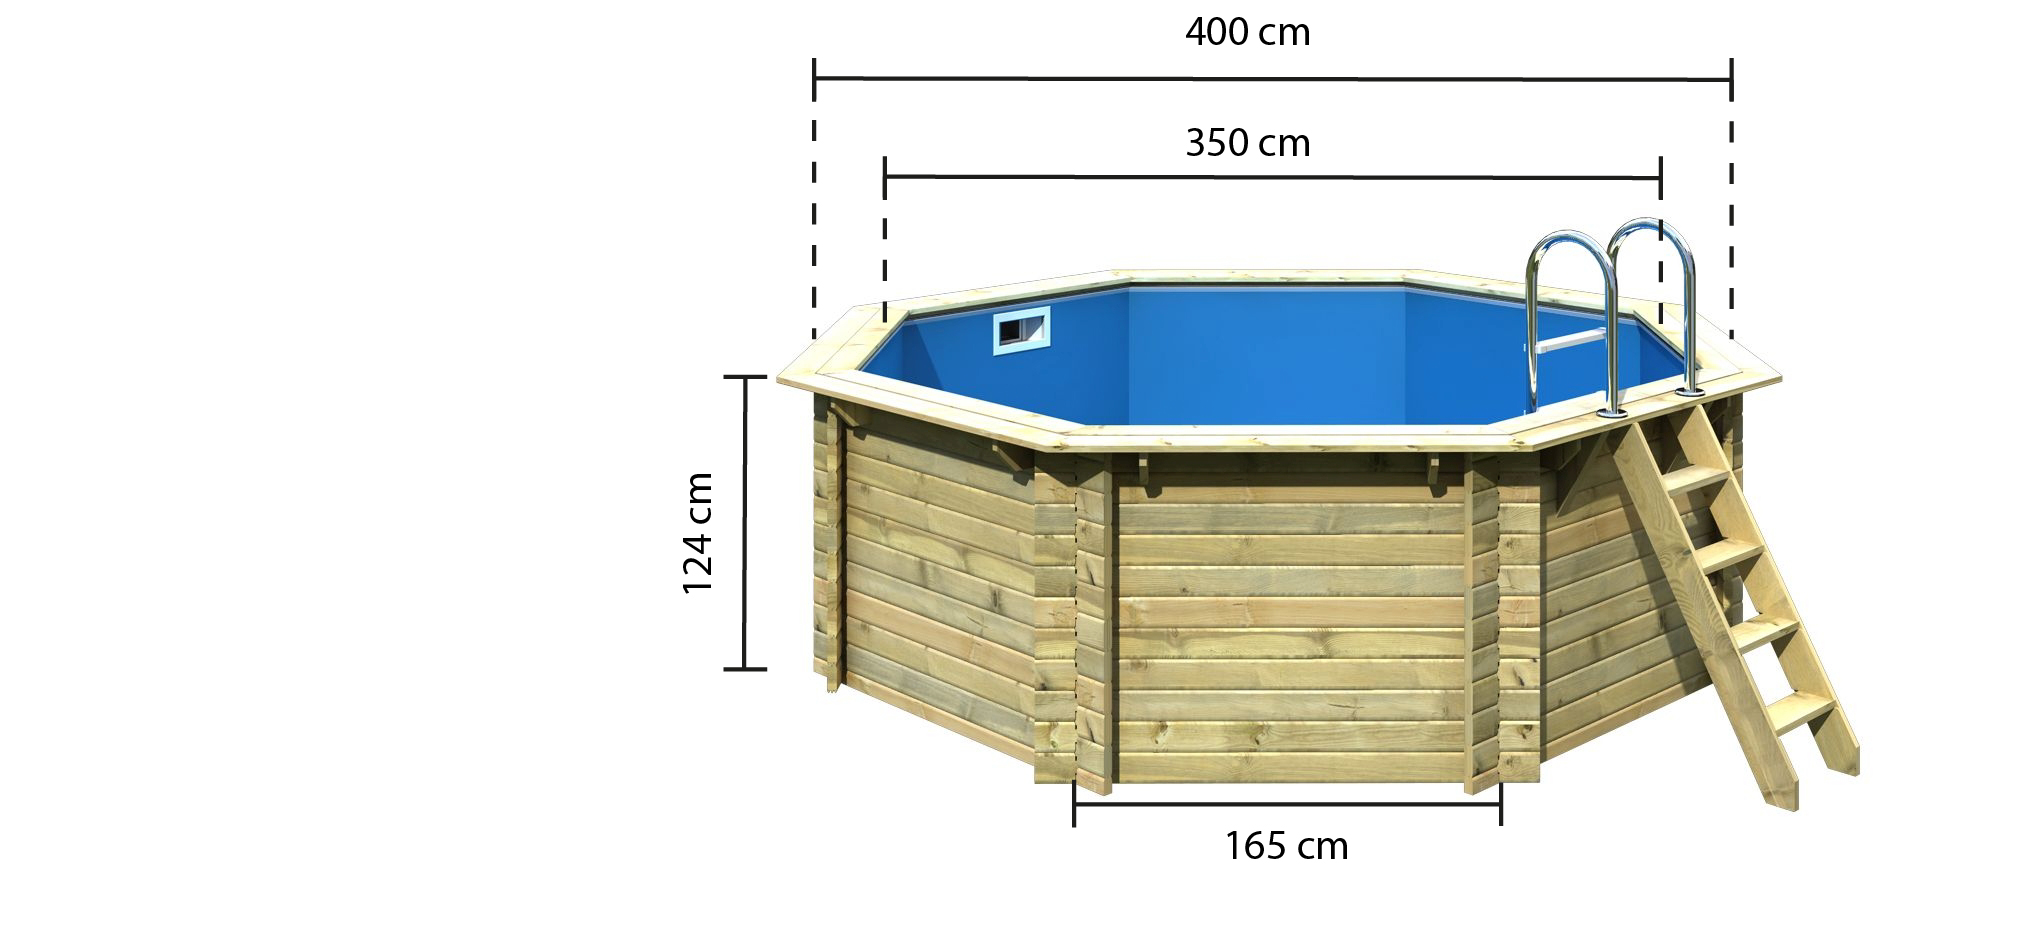 Karibu Pool Modell 1A Classic 400x400 cm, Holz kdi mit blauer Poolfolie 